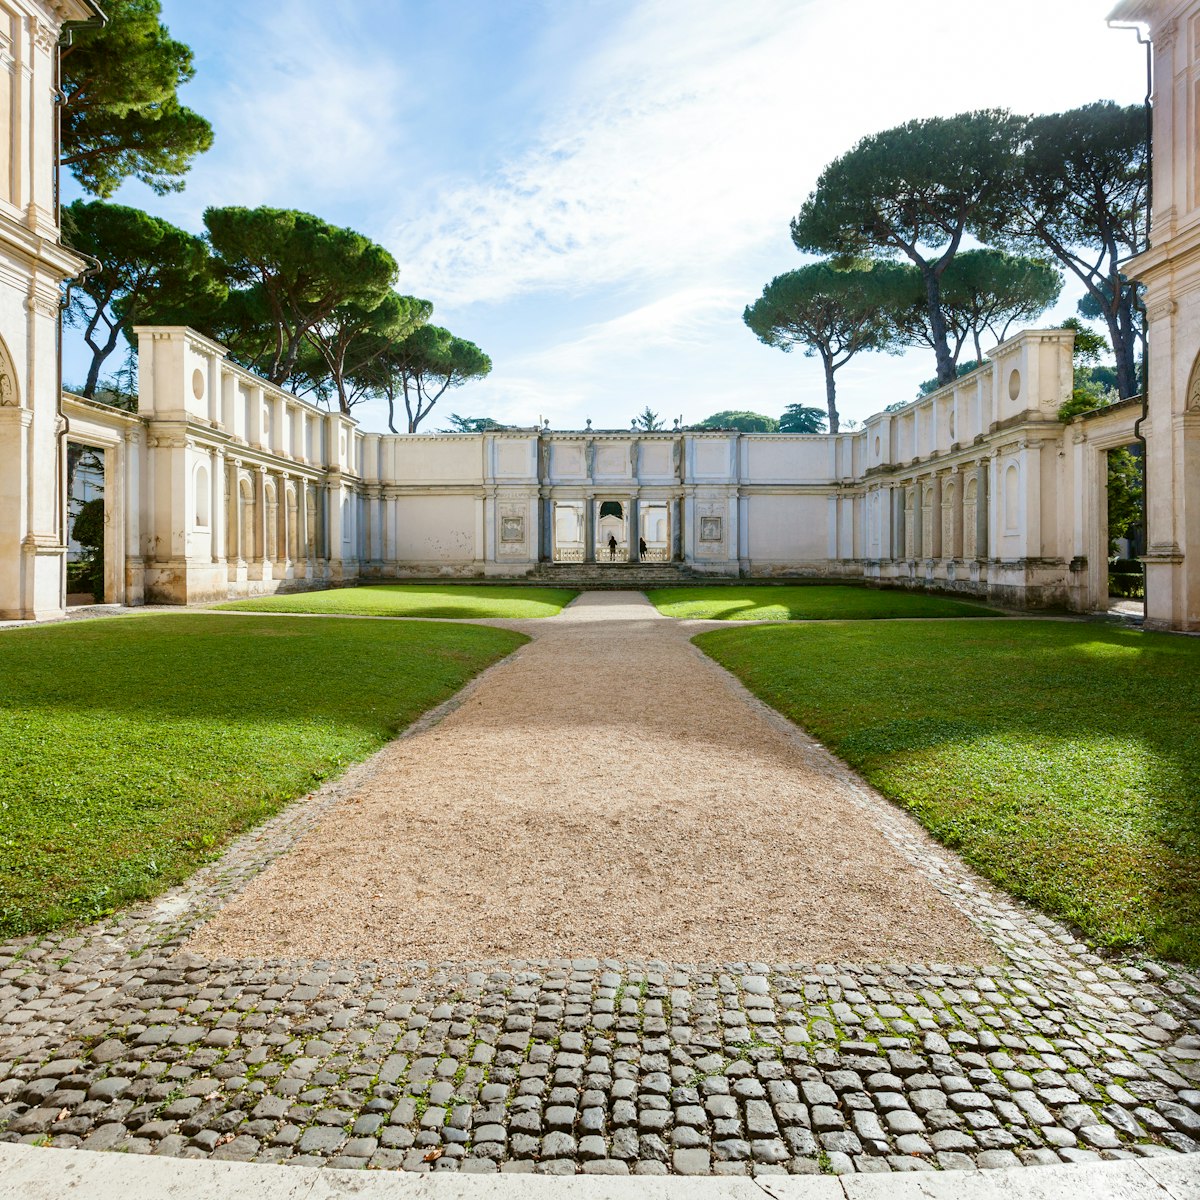 Courtyard of Villa Giulia in Rome city